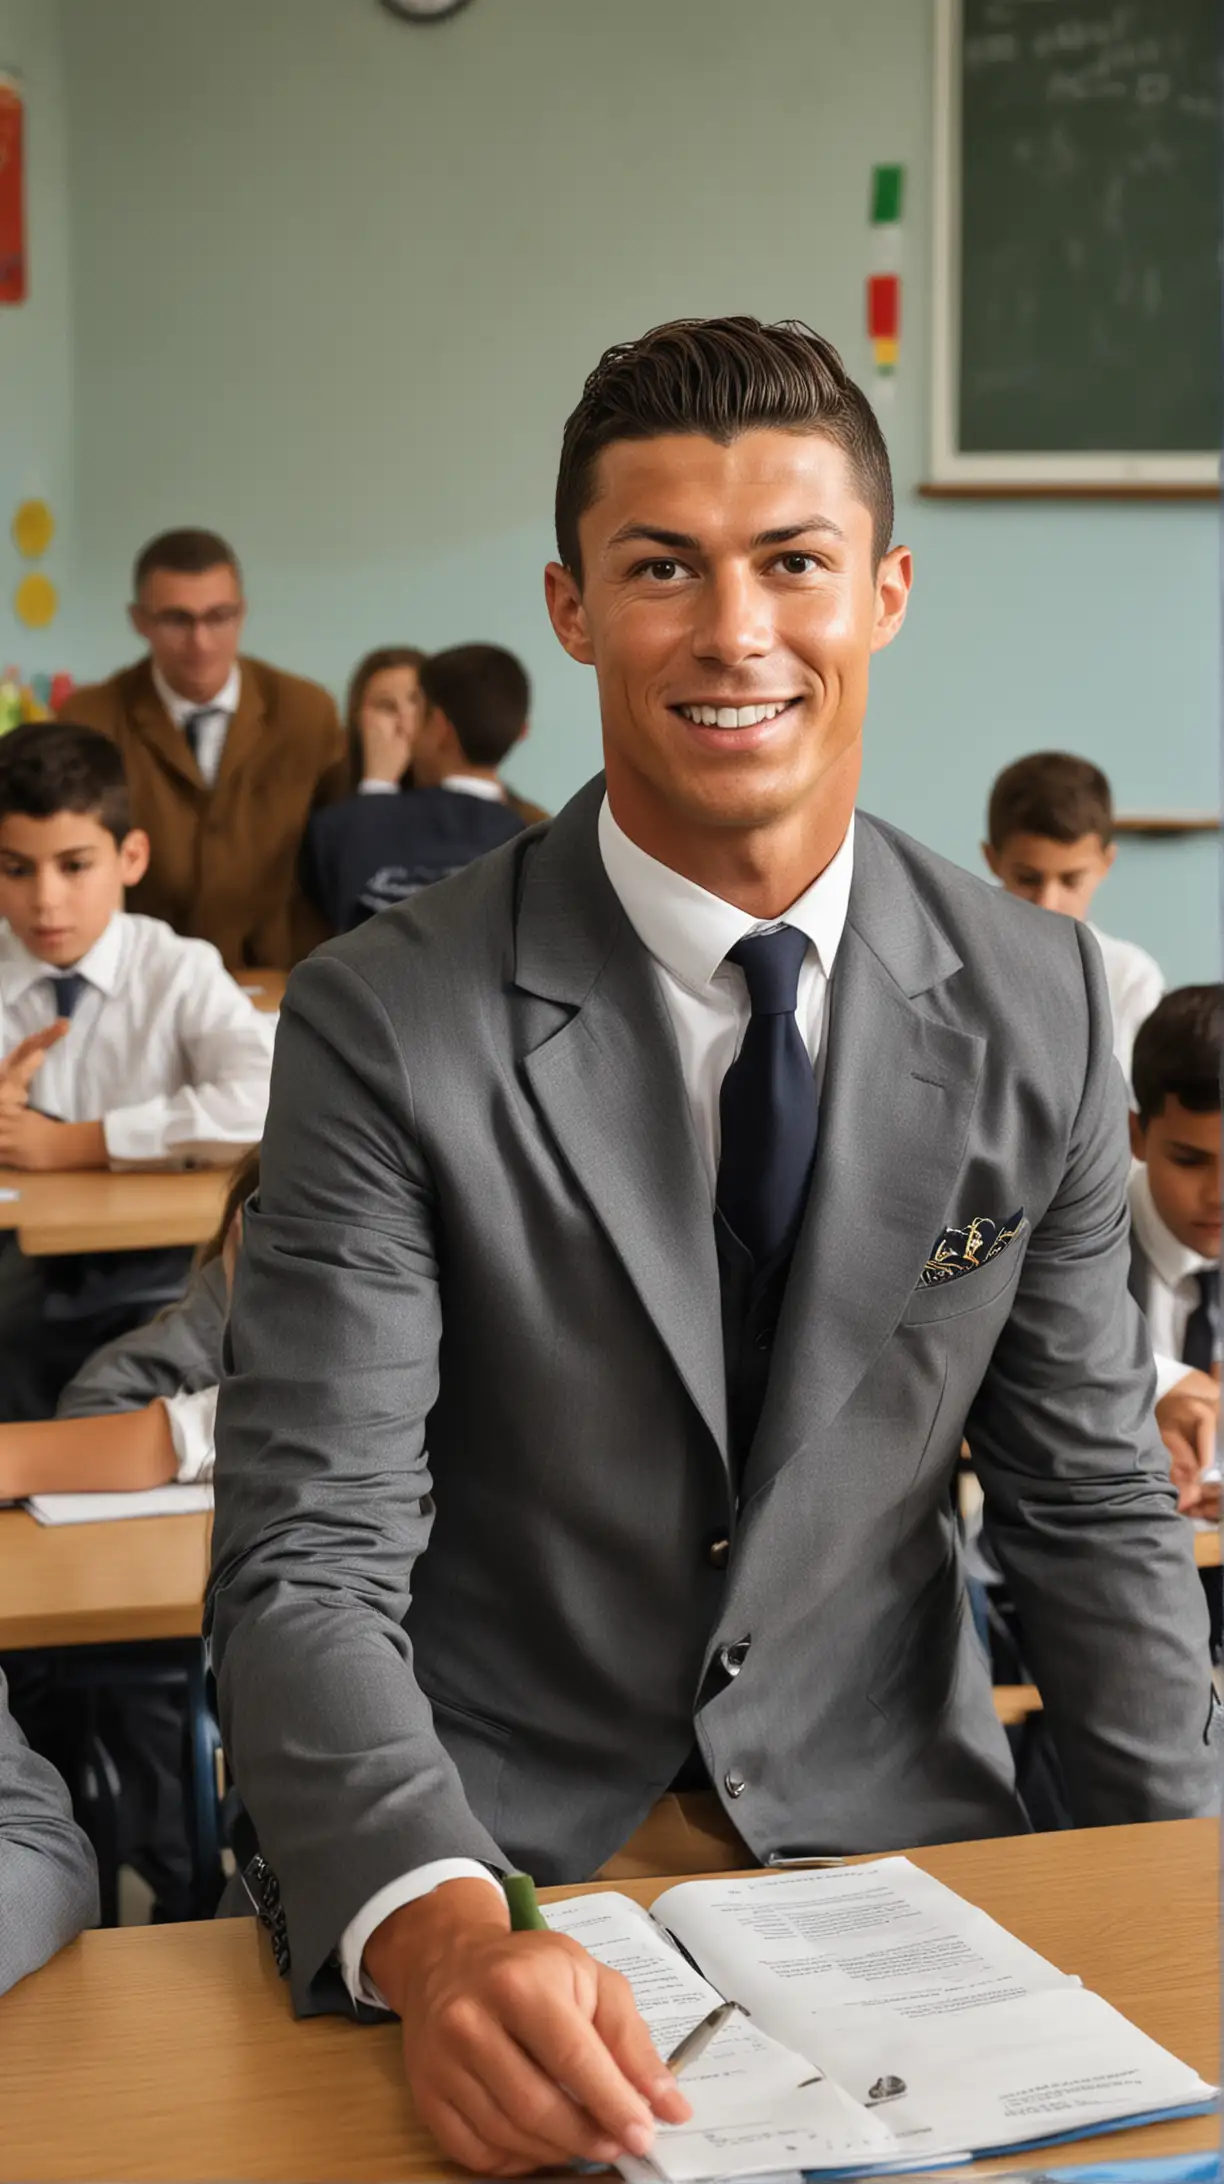 Cristiano Ronaldo as Headteacher with Kids in Classroom Setting